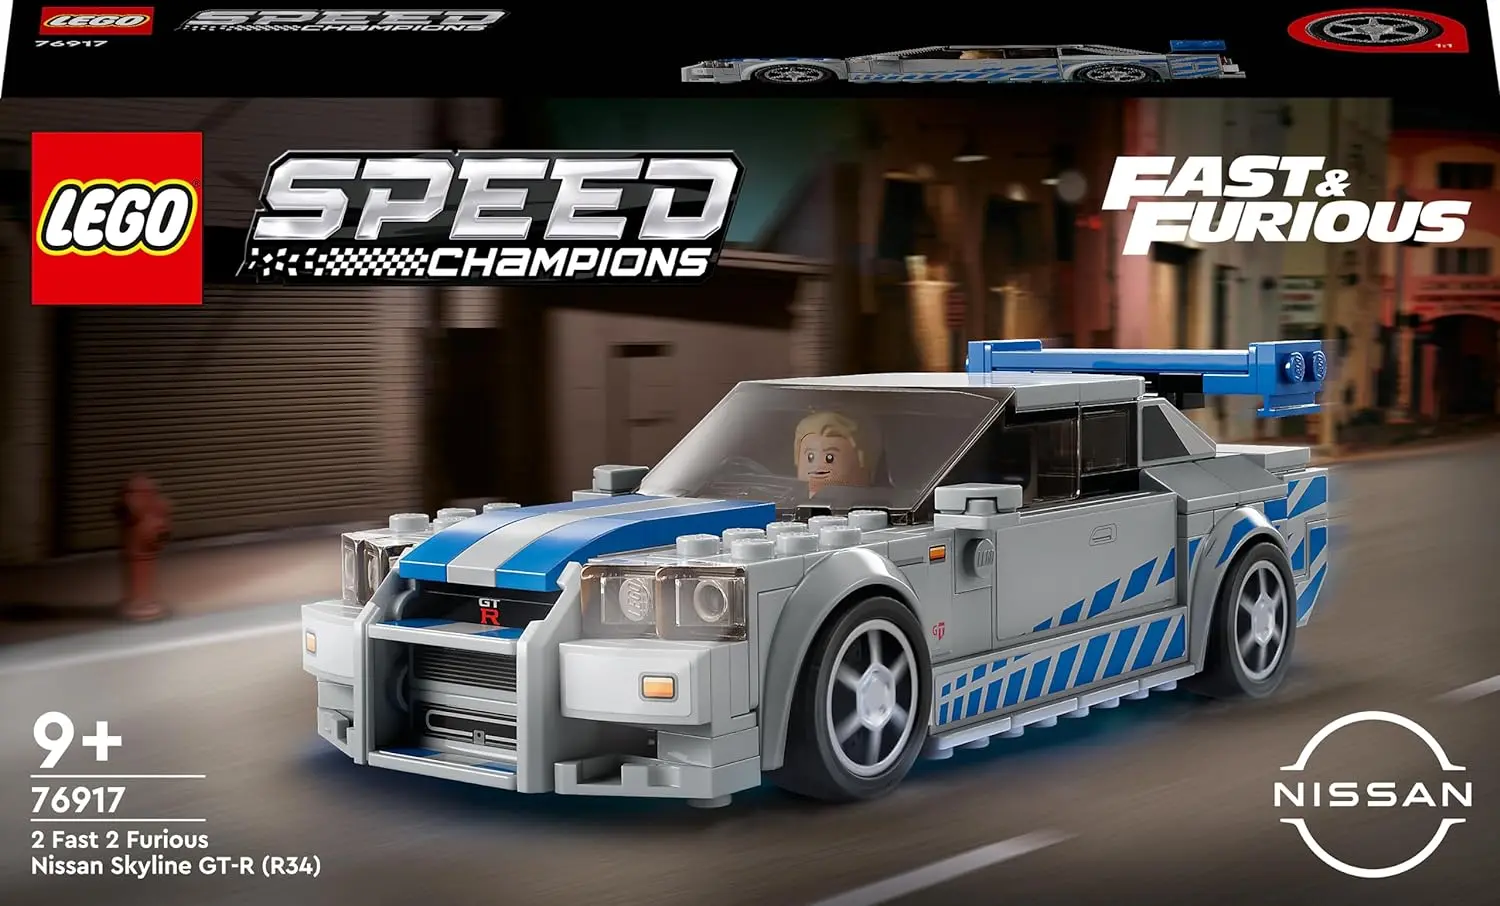 Lego Speed Champions 2 Fast 2 Furious Nissan Skyline Gt R